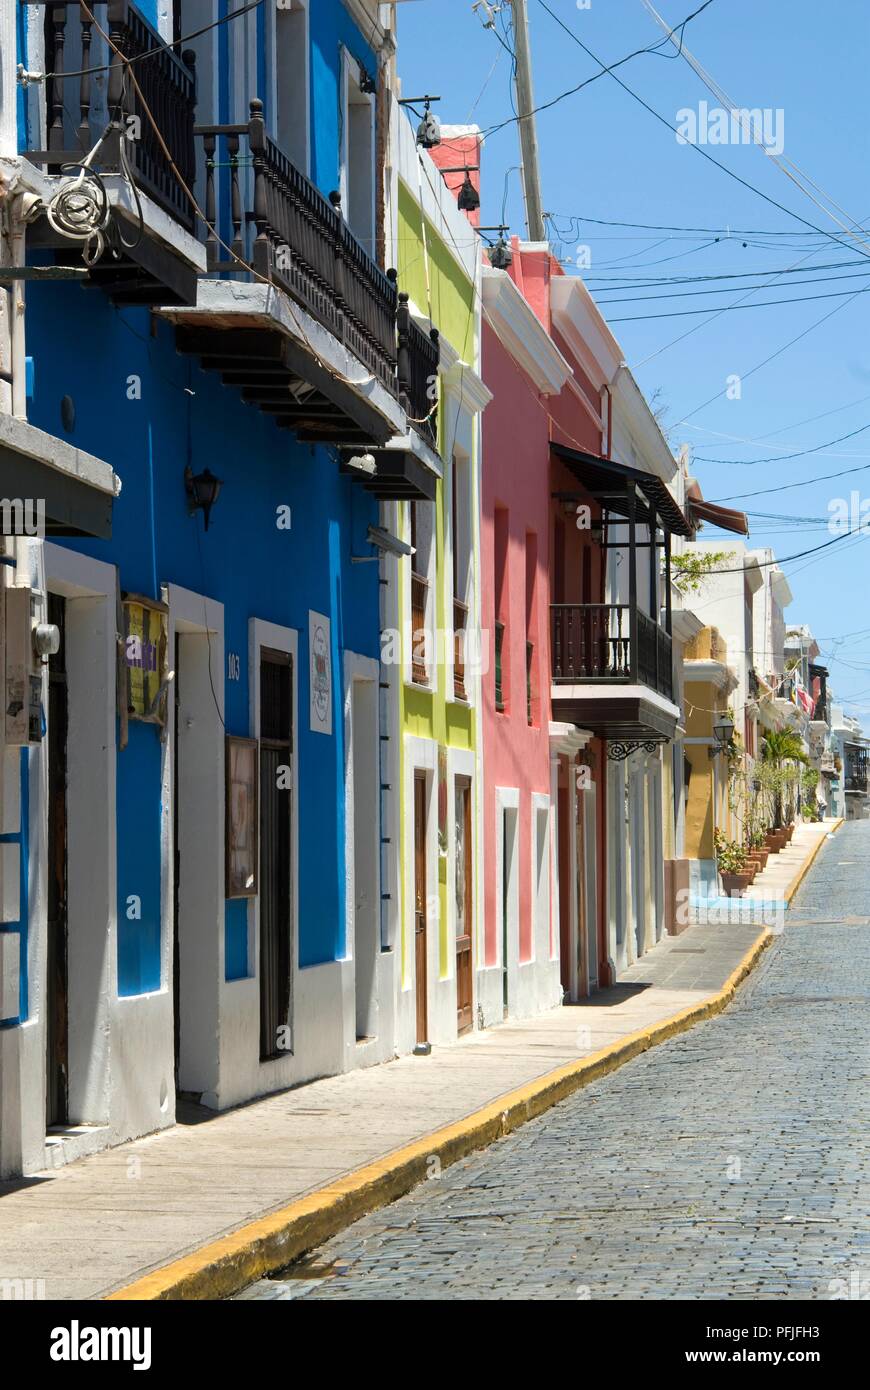 Puerto Rico, San Juan, Calle de San Sebastian, colourful houses lining  street Stock Photo - Alamy